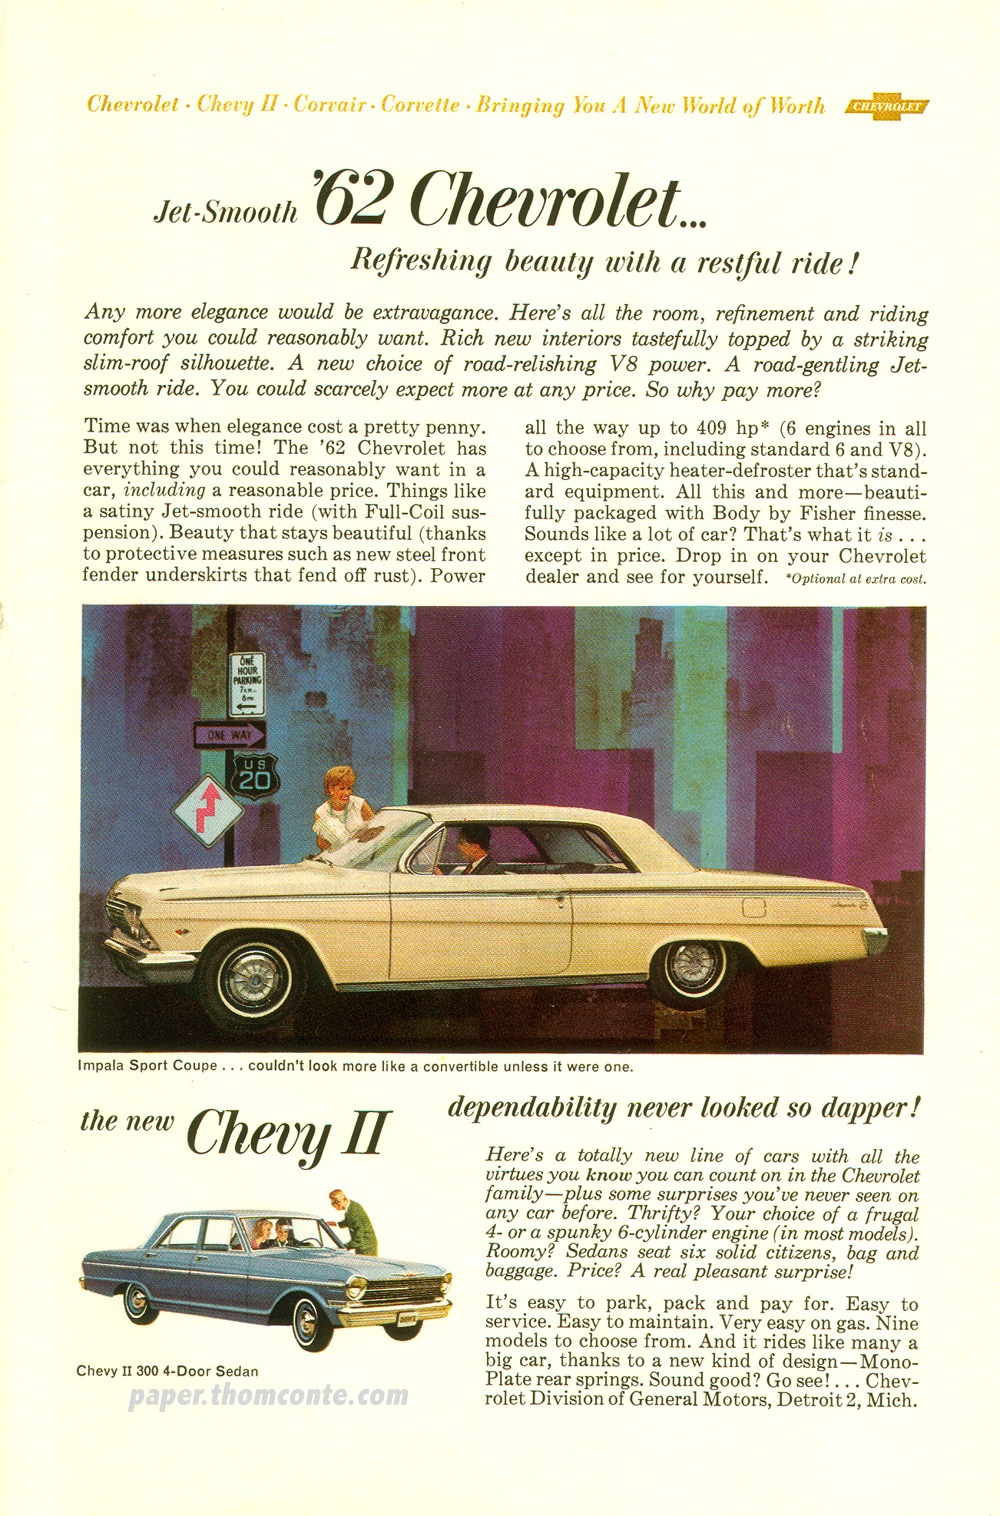 Chevrolet advertisement